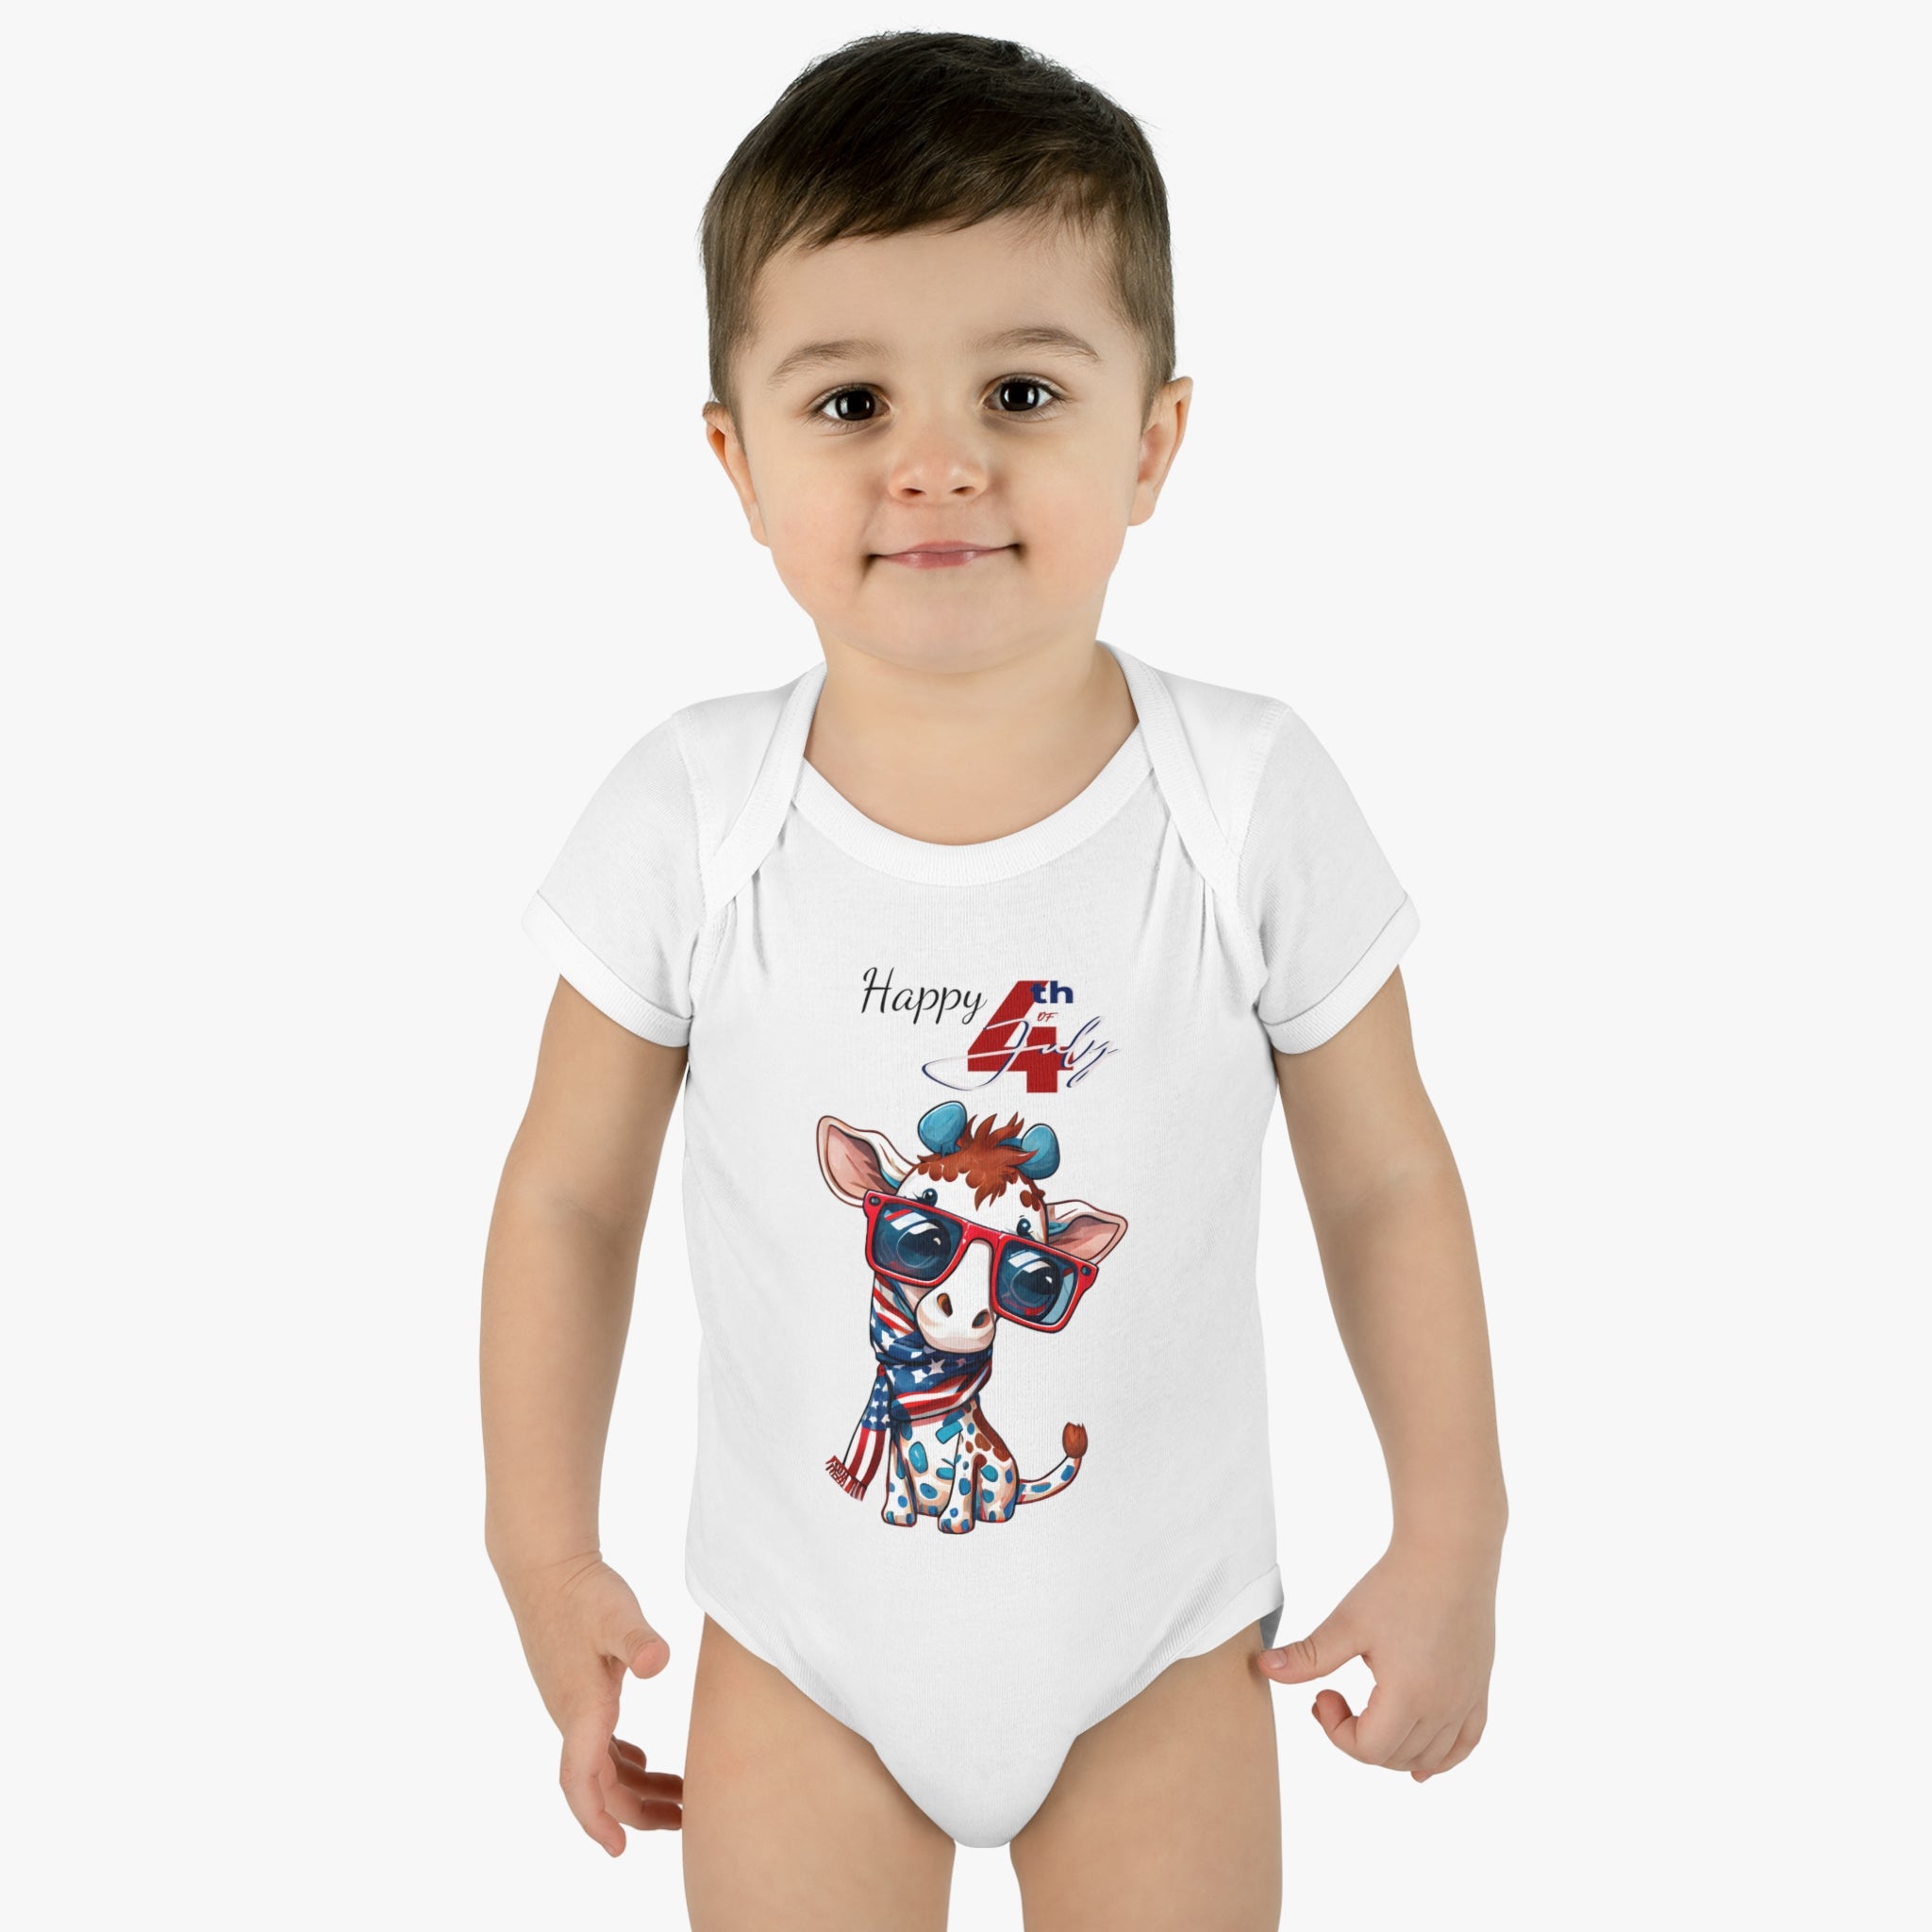 Happy 4th of July Giraffe Design Baby Bodysuit